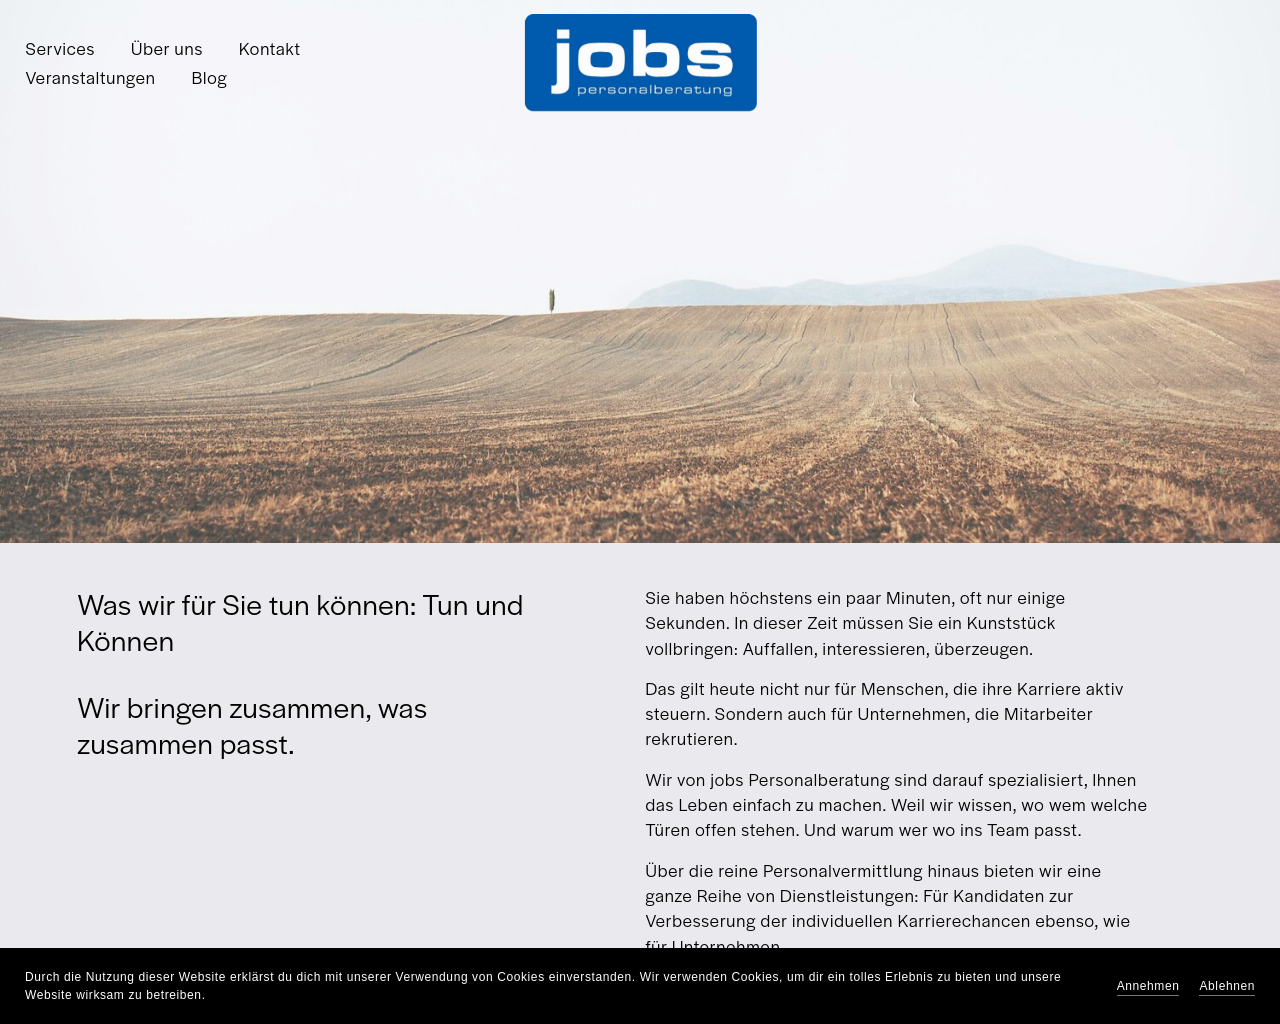 jobs-personalberatung.com